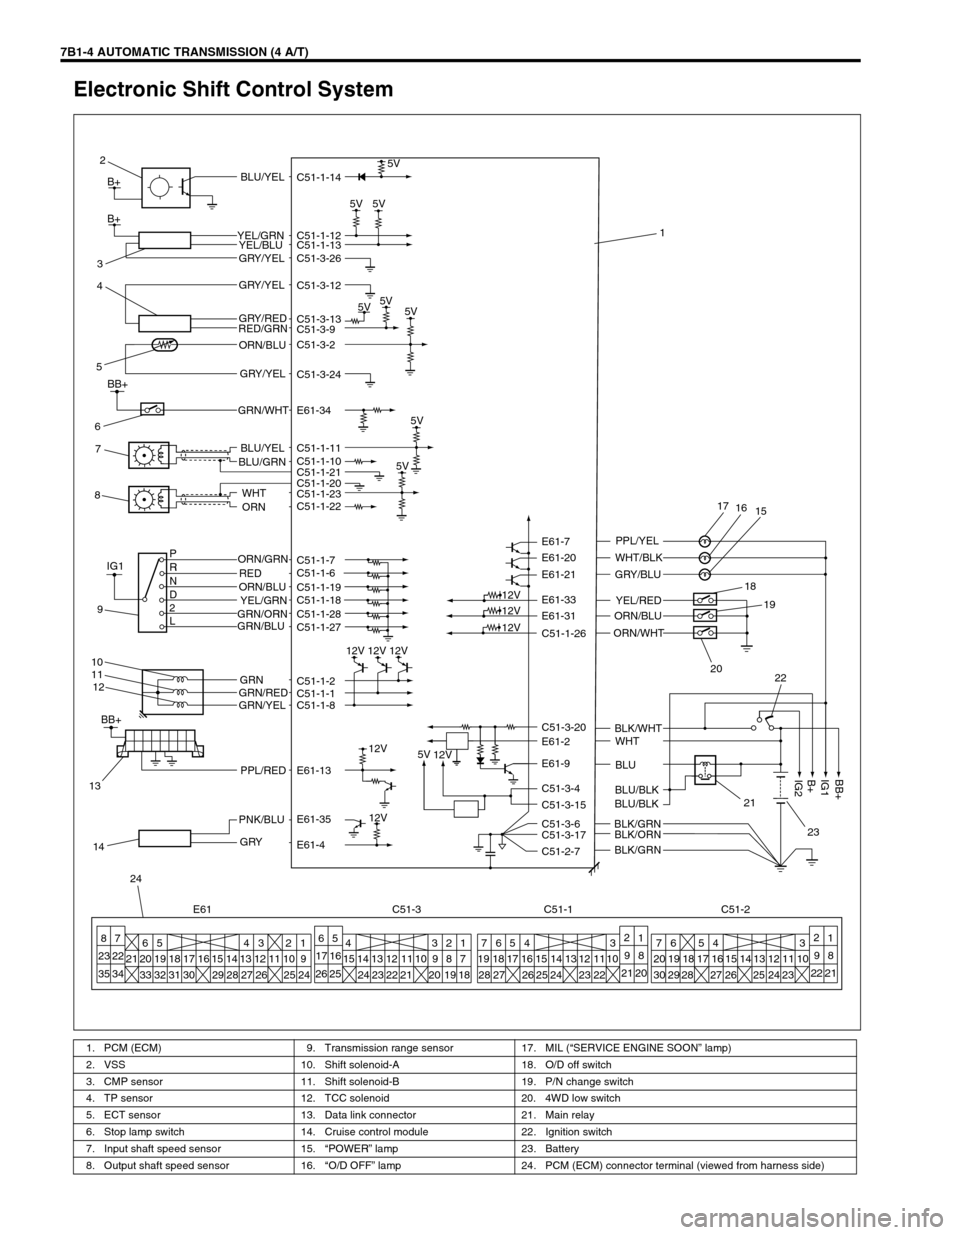 SUZUKI GRAND VITARA 2001 2.G Owners Manual 7B1-4 AUTOMATIC TRANSMISSION (4 A/T)
Electronic Shift Control System
1. PCM (ECM) 9. Transmission range sensor 17. MIL (“SERVICE ENGINE SOON” lamp)
2. VSS 10. Shift solenoid-A 18. O/D off switch
3